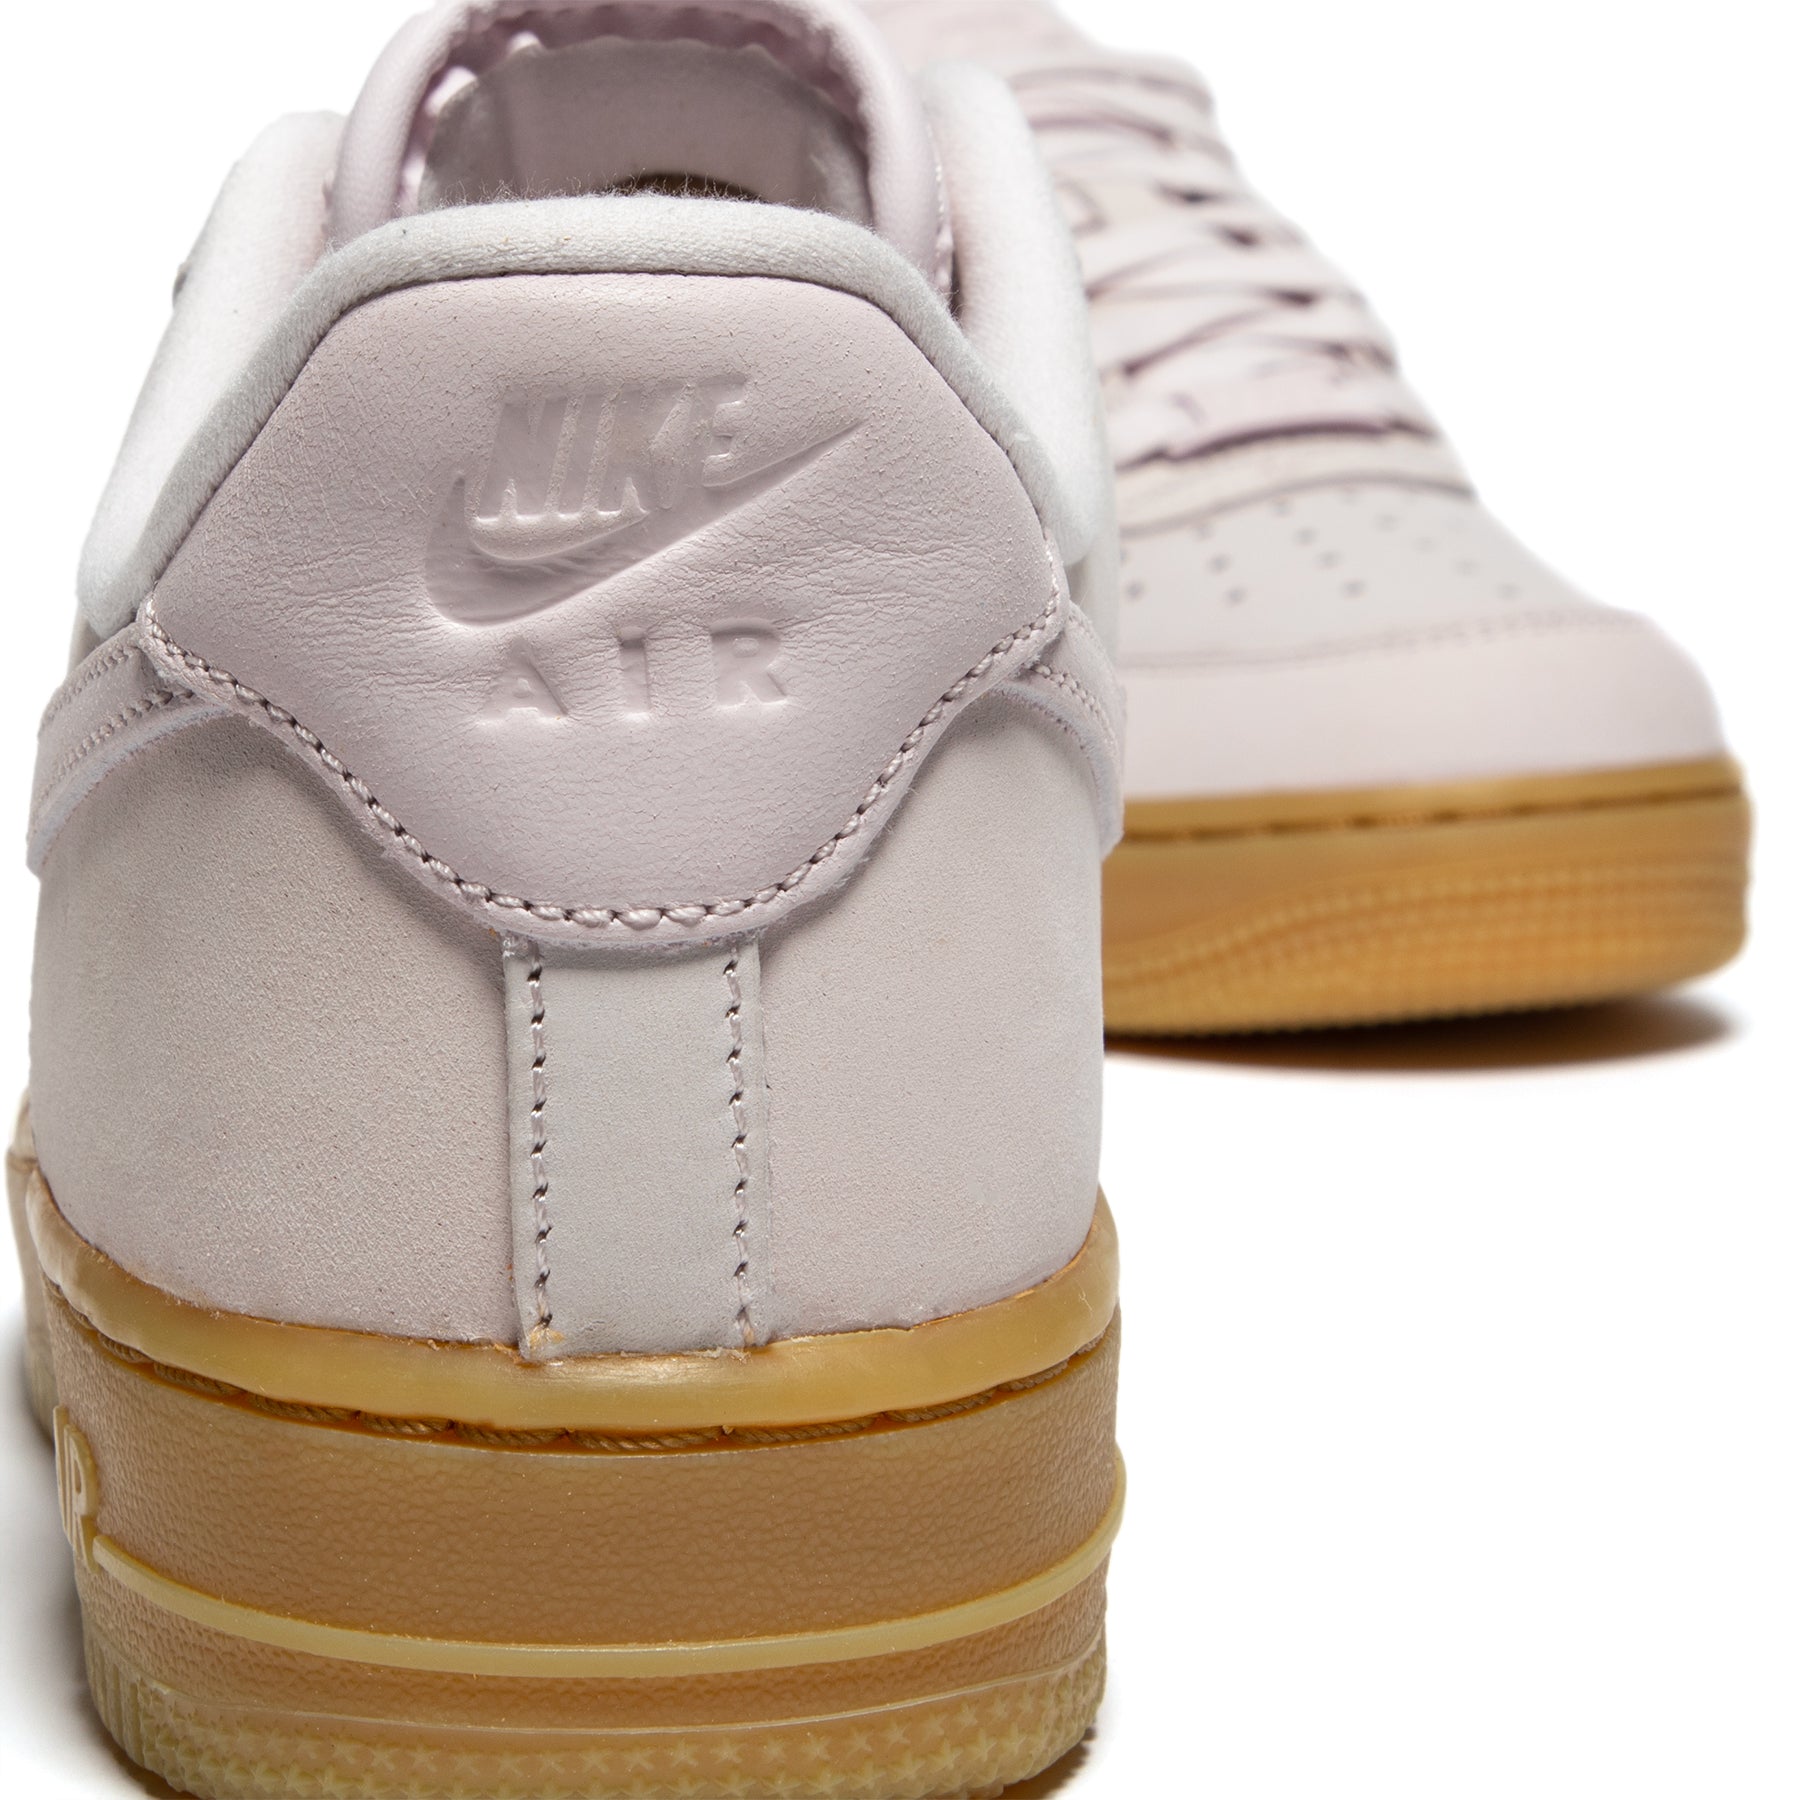 Nike Air Force 1 Premium (Pearl Pink/Gum Light Brown) Concepts